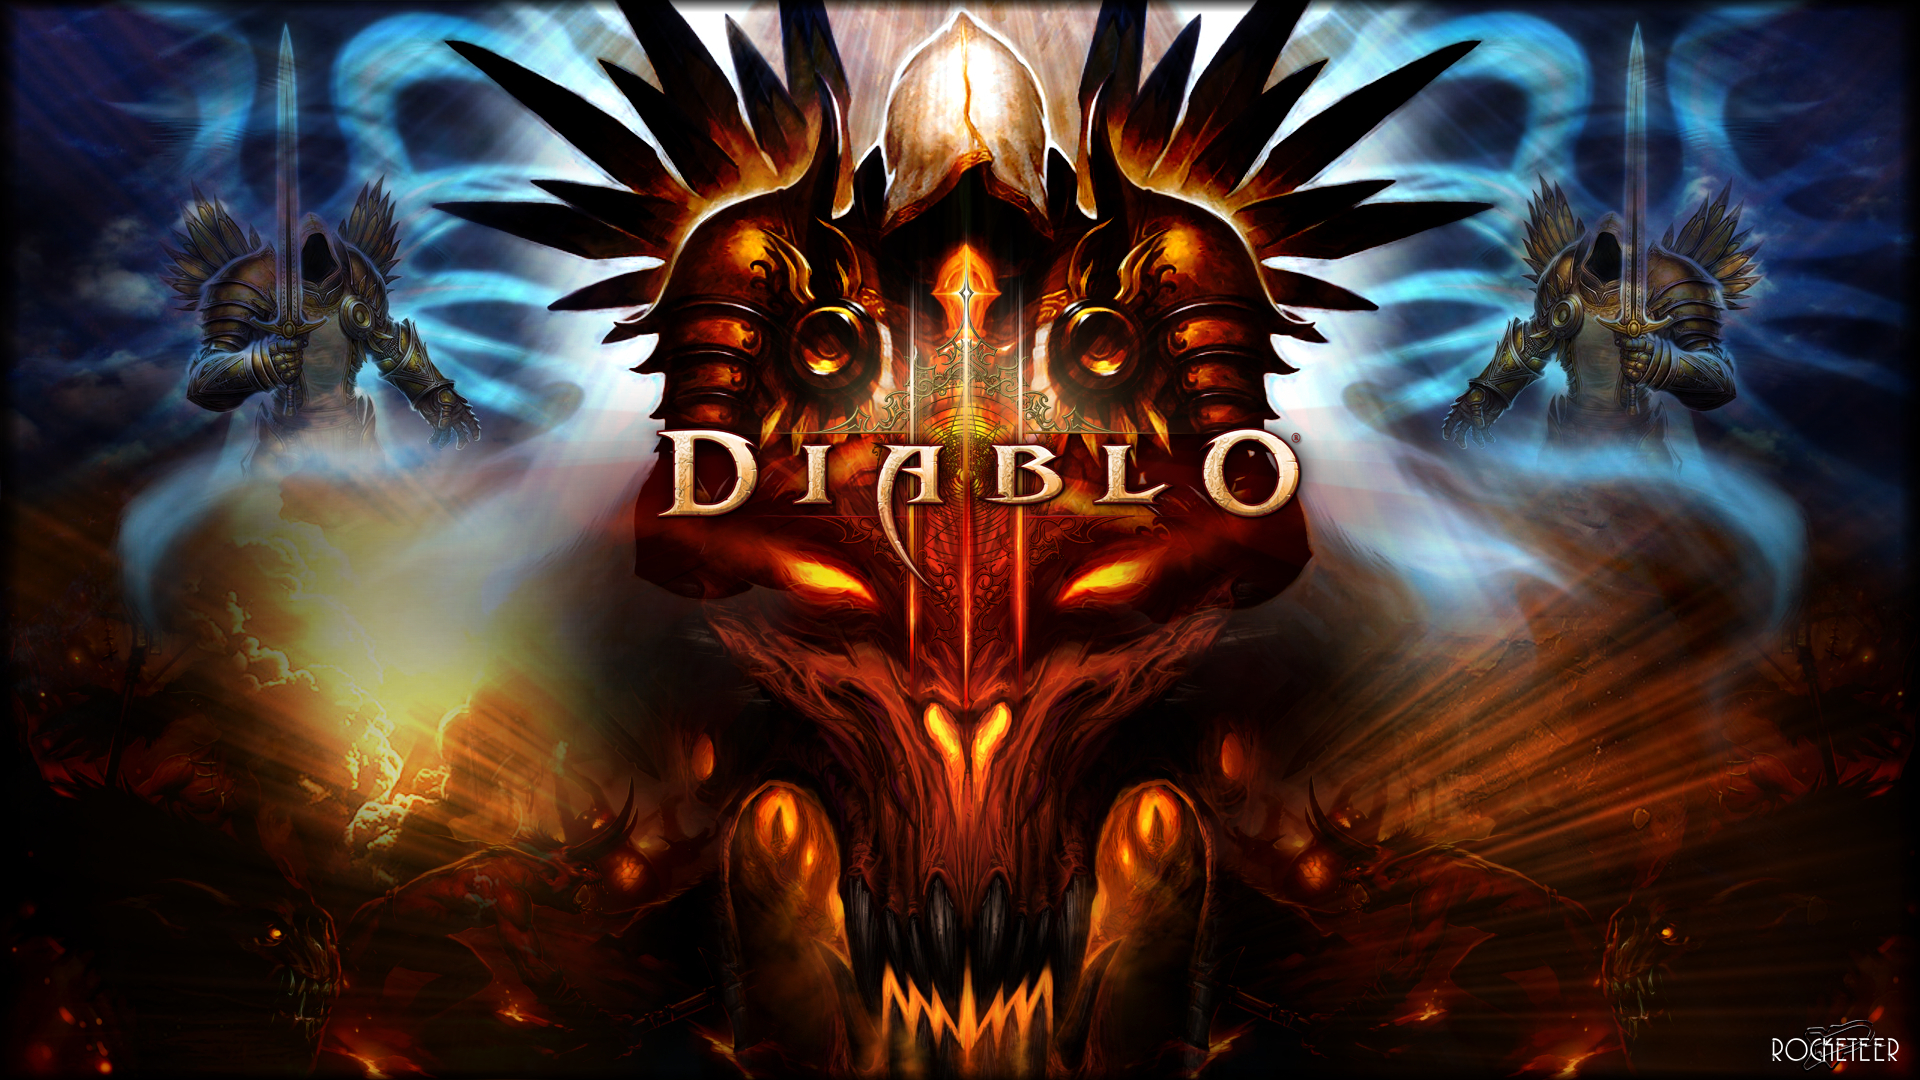 Diablo Iii The Archangel Wallpaper And Image Pictures